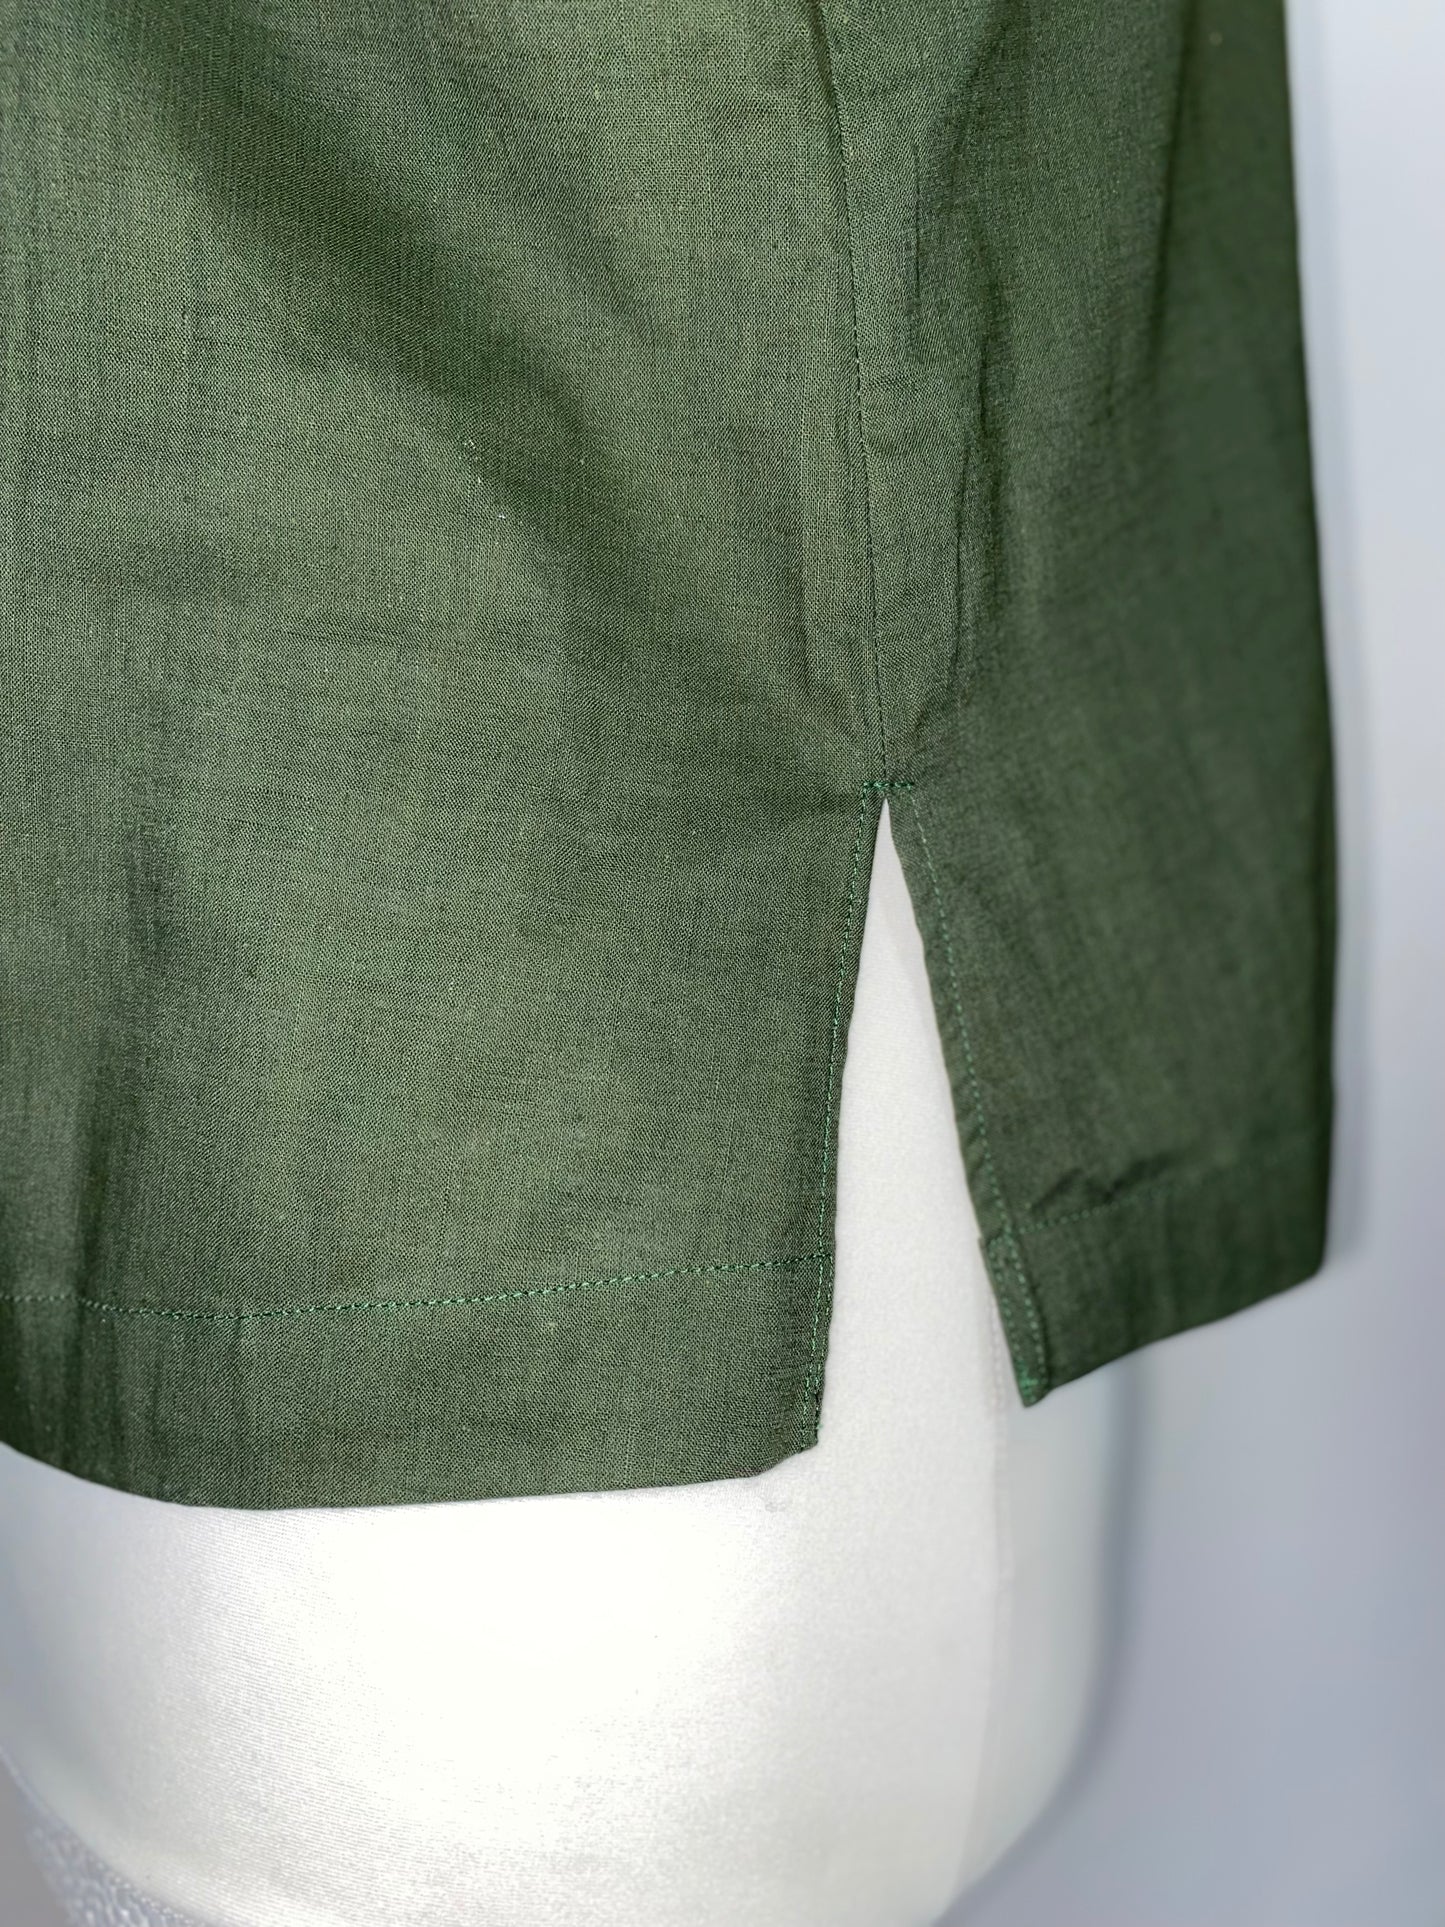 Short-sleeved shirts made from old furoshiki cloth